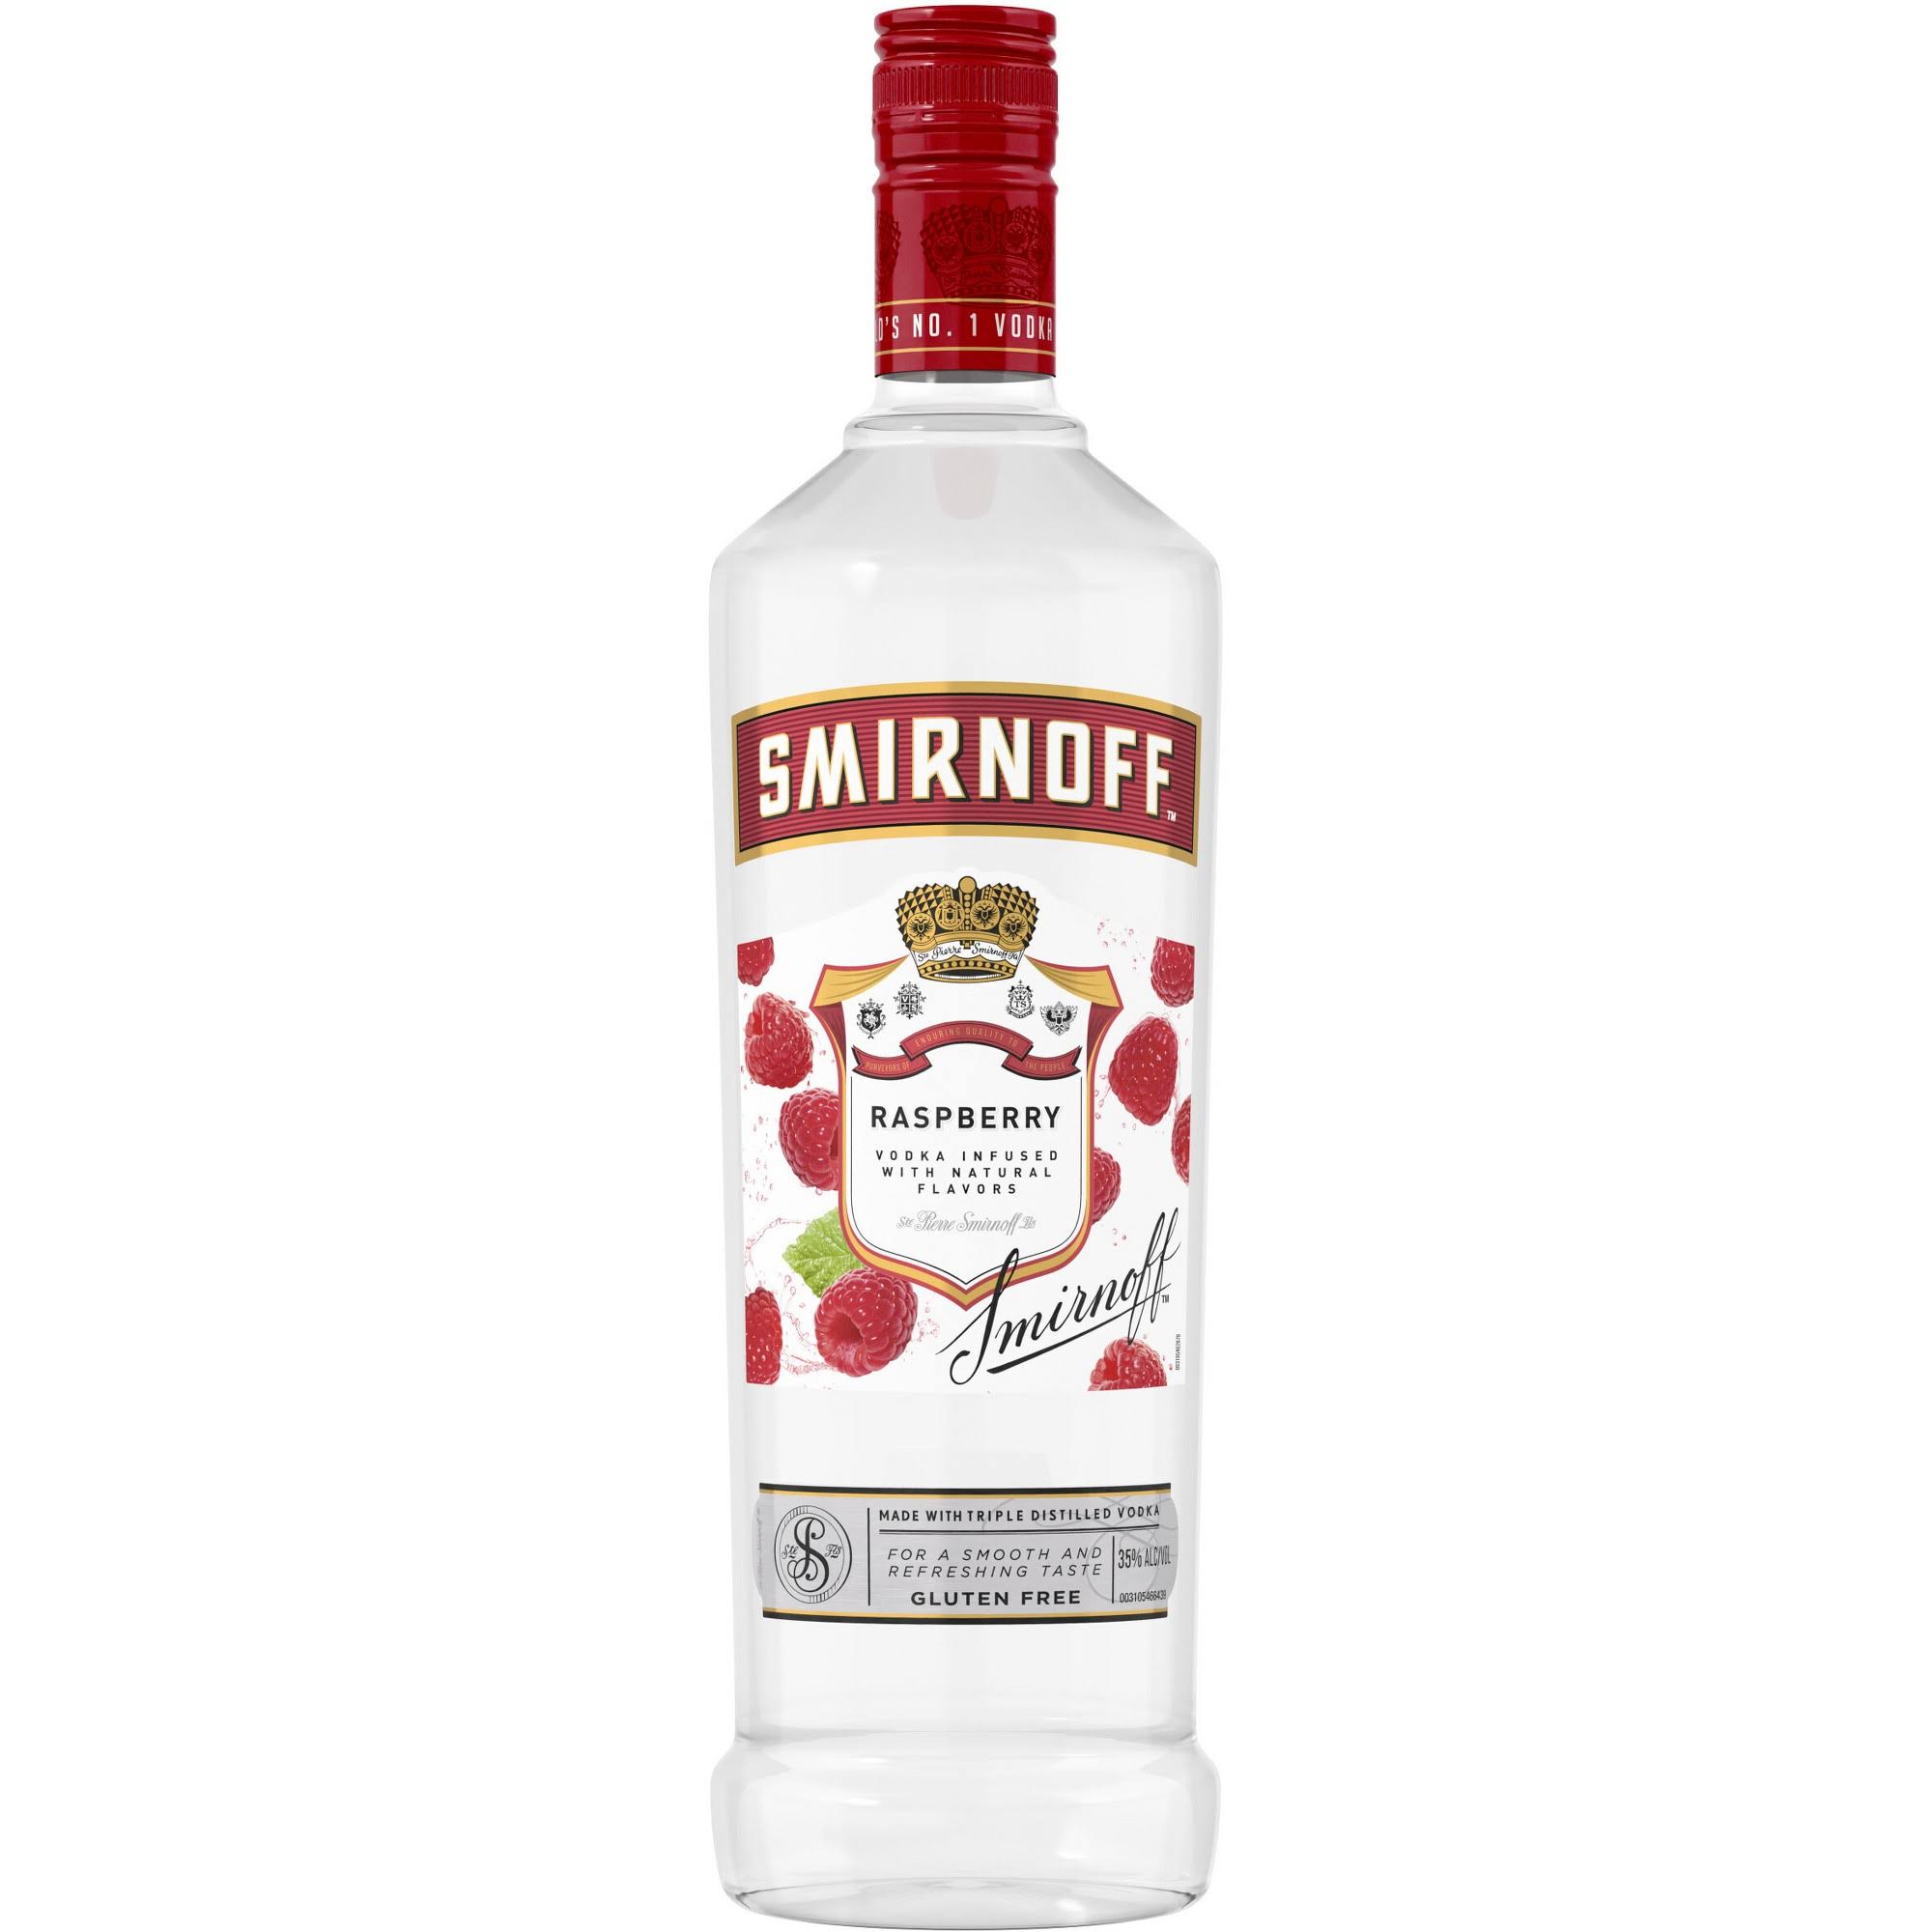 Smirnoff Vodka, Triple Distilled, Twist of Raspberry - 1 lt